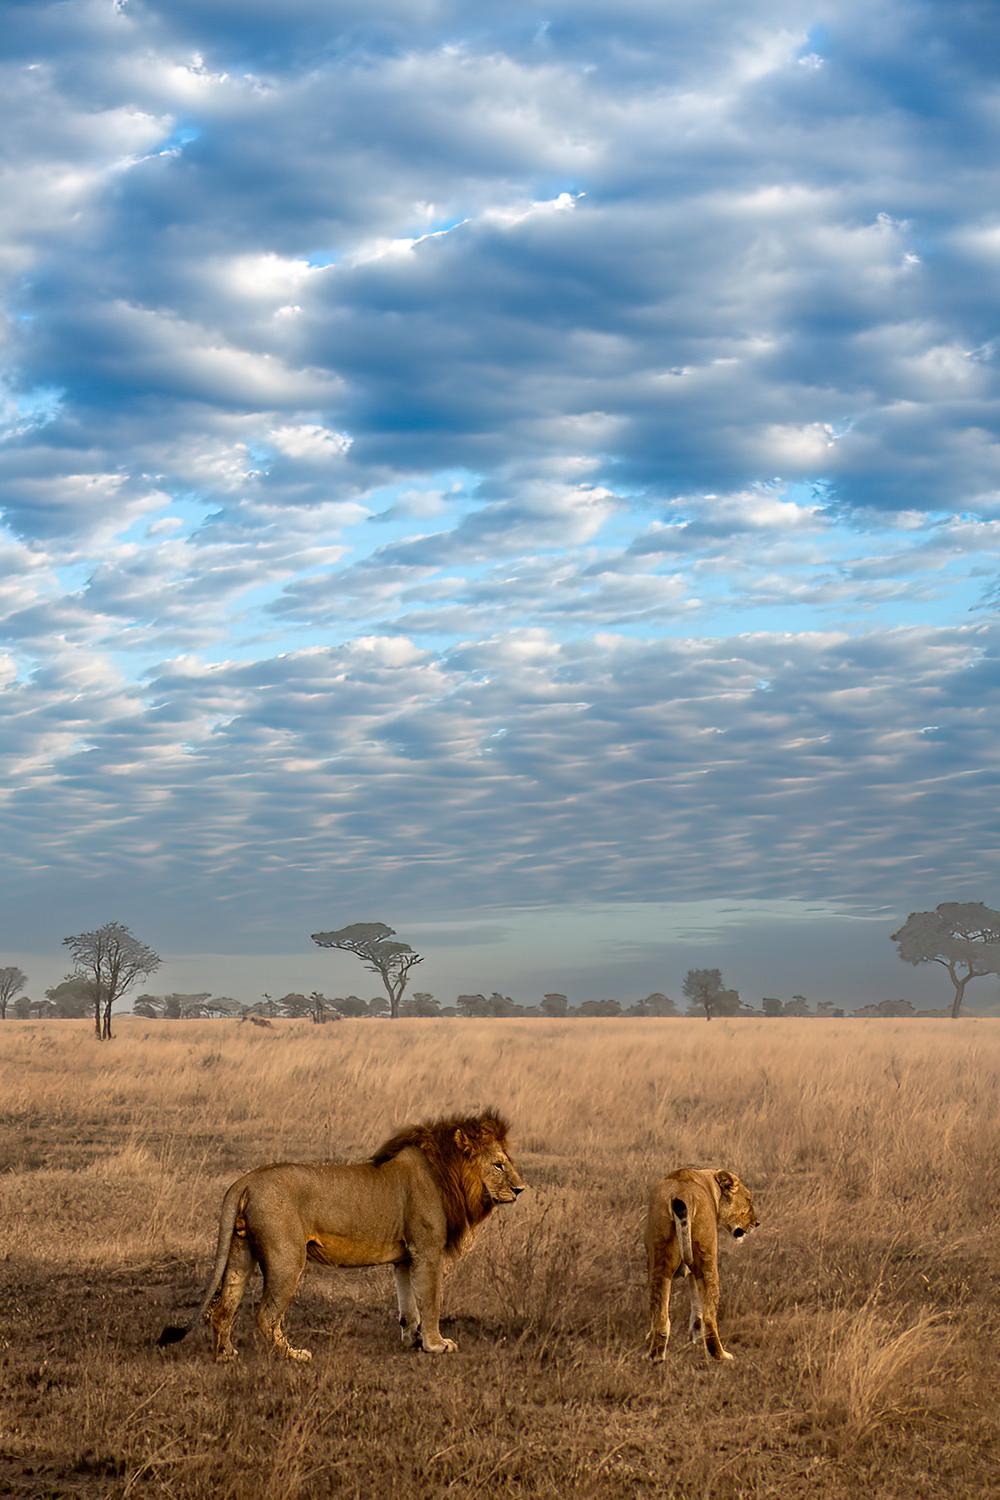 Pair of lions in the savannah...